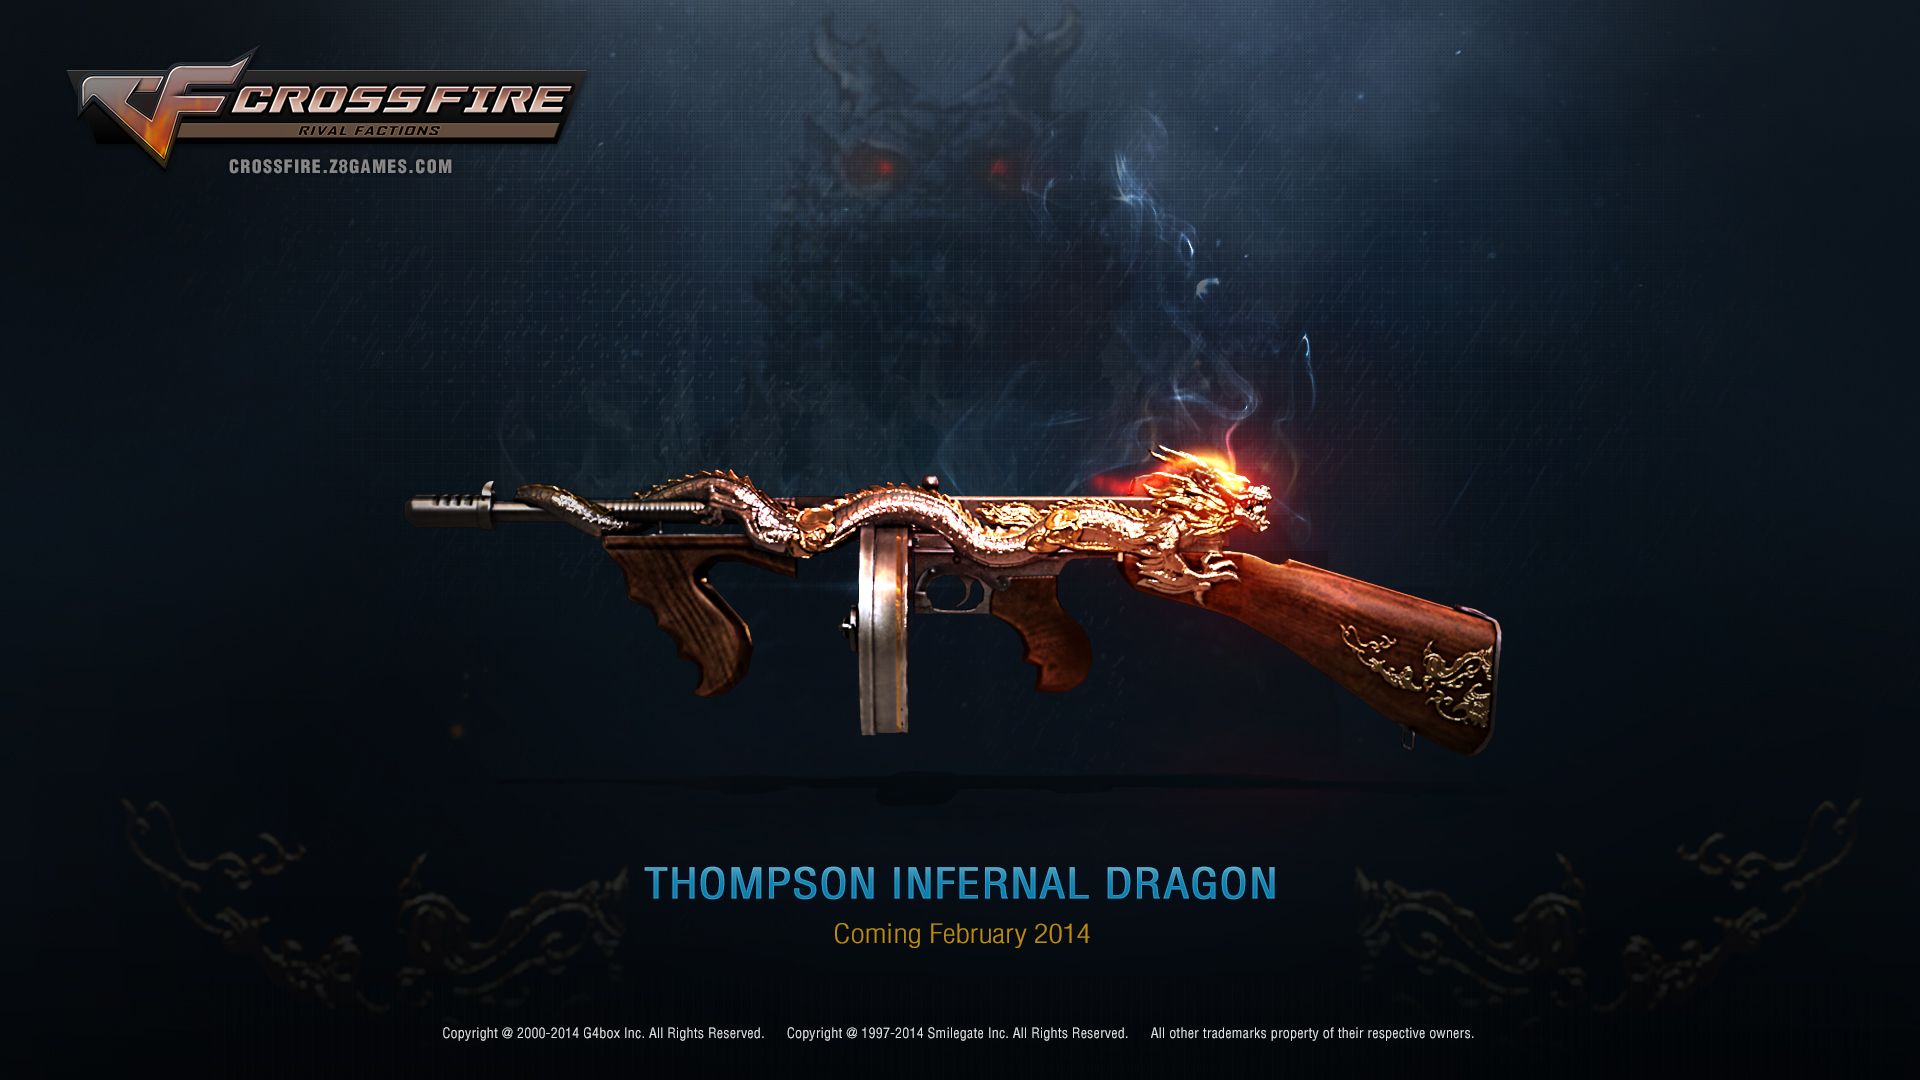 Thompson Infernal Dragon on it's way!